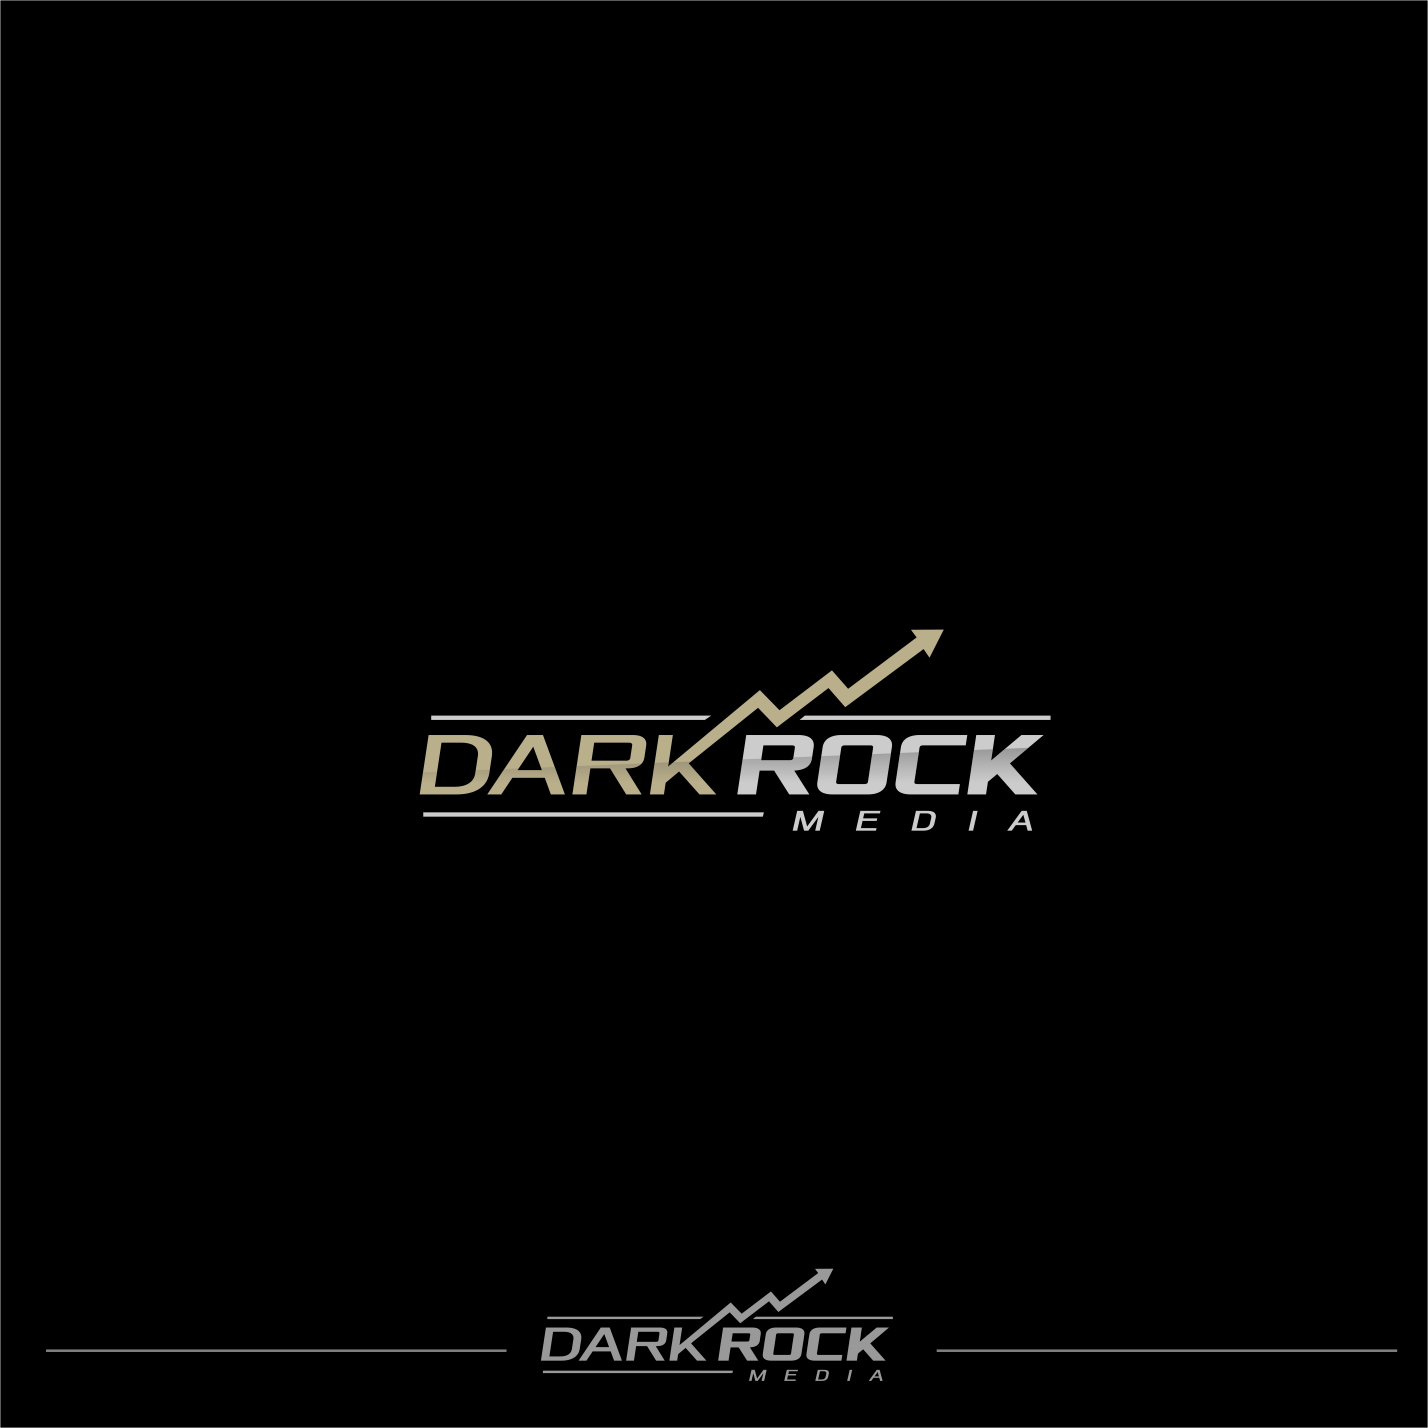 Rock Company Logo - Upmarket Logo Designs. Advertising Logo Design Project for Dark